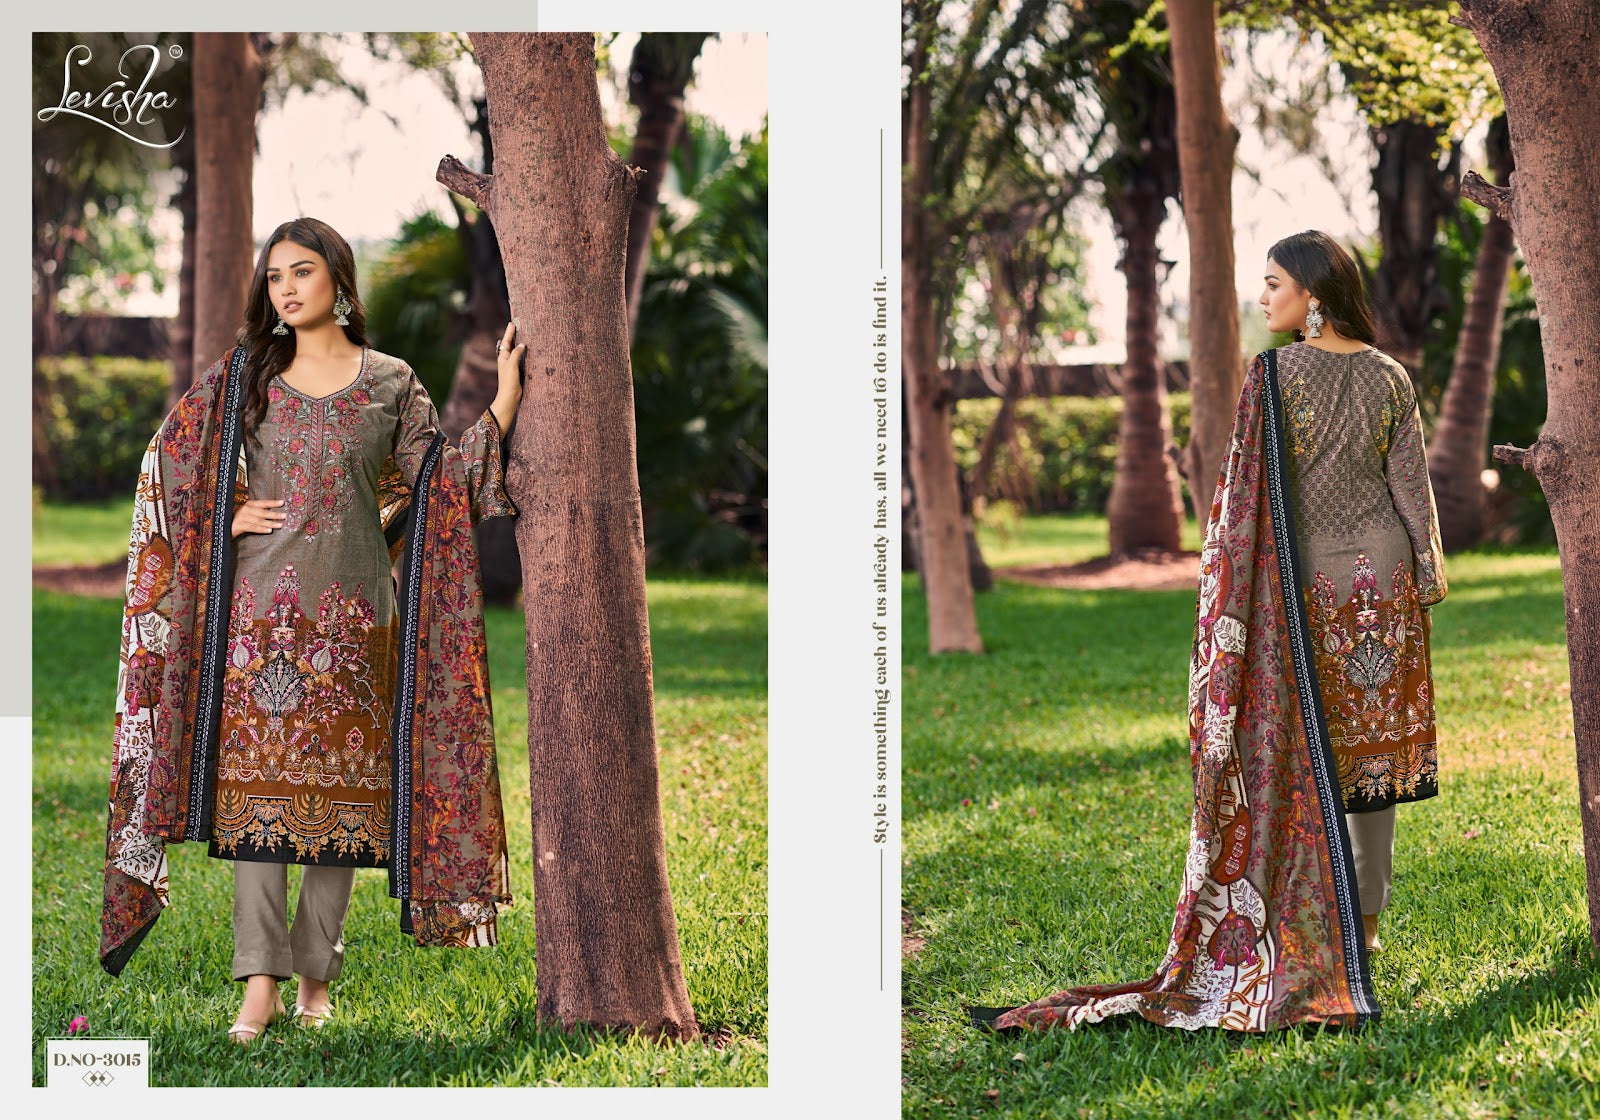 Naira Nx Vol 3 Levisha Cambric Cotton Karachi Salwar Suits